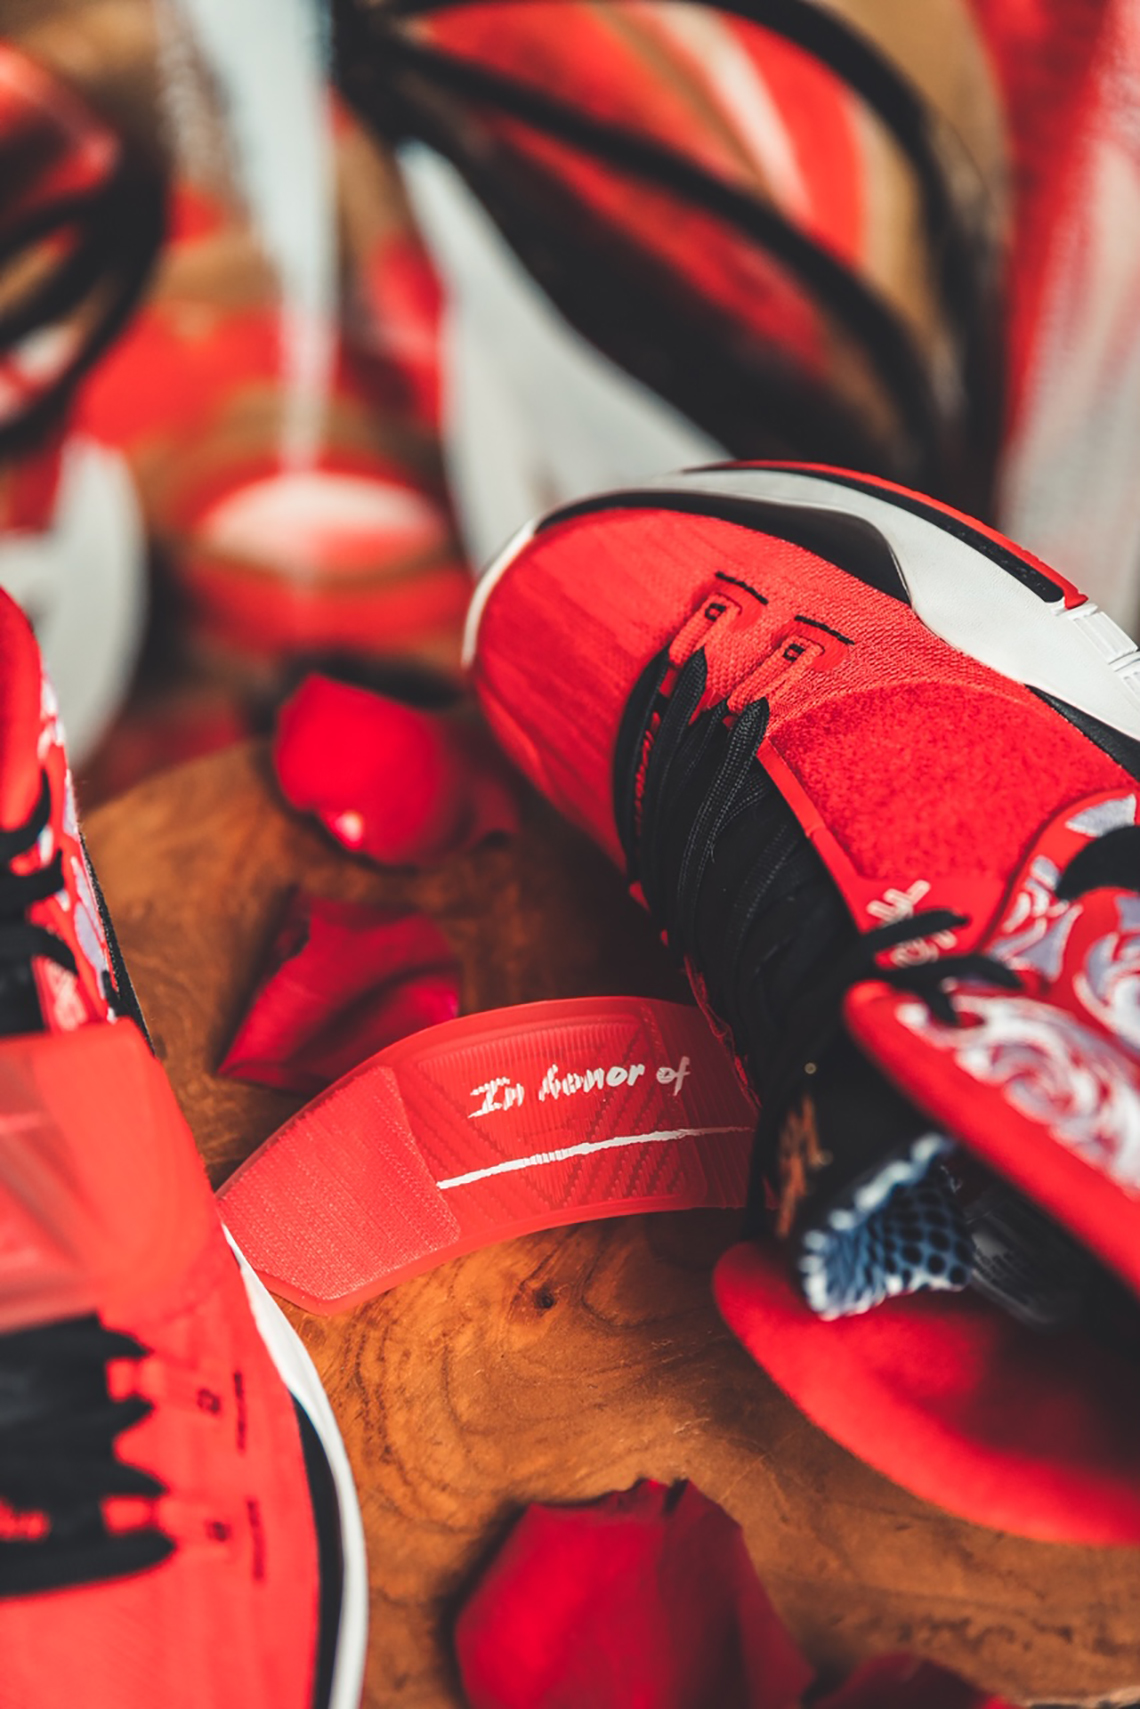  Nike Kyrie 6 “Mom” Red, Shoe Strap 